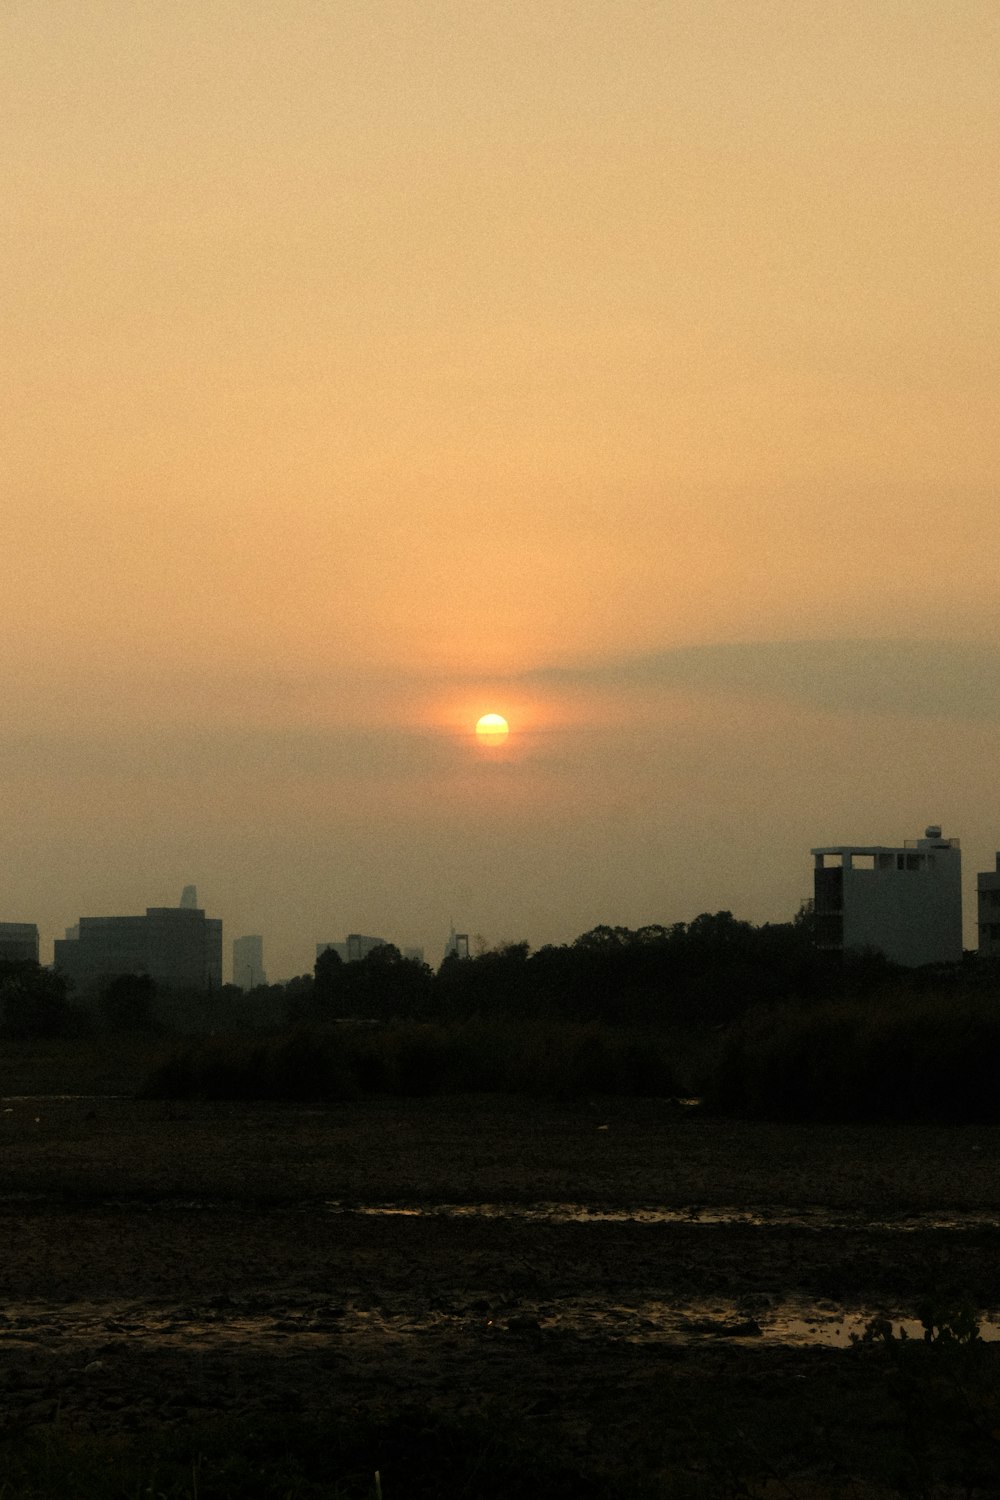 the sun is setting over the city skyline